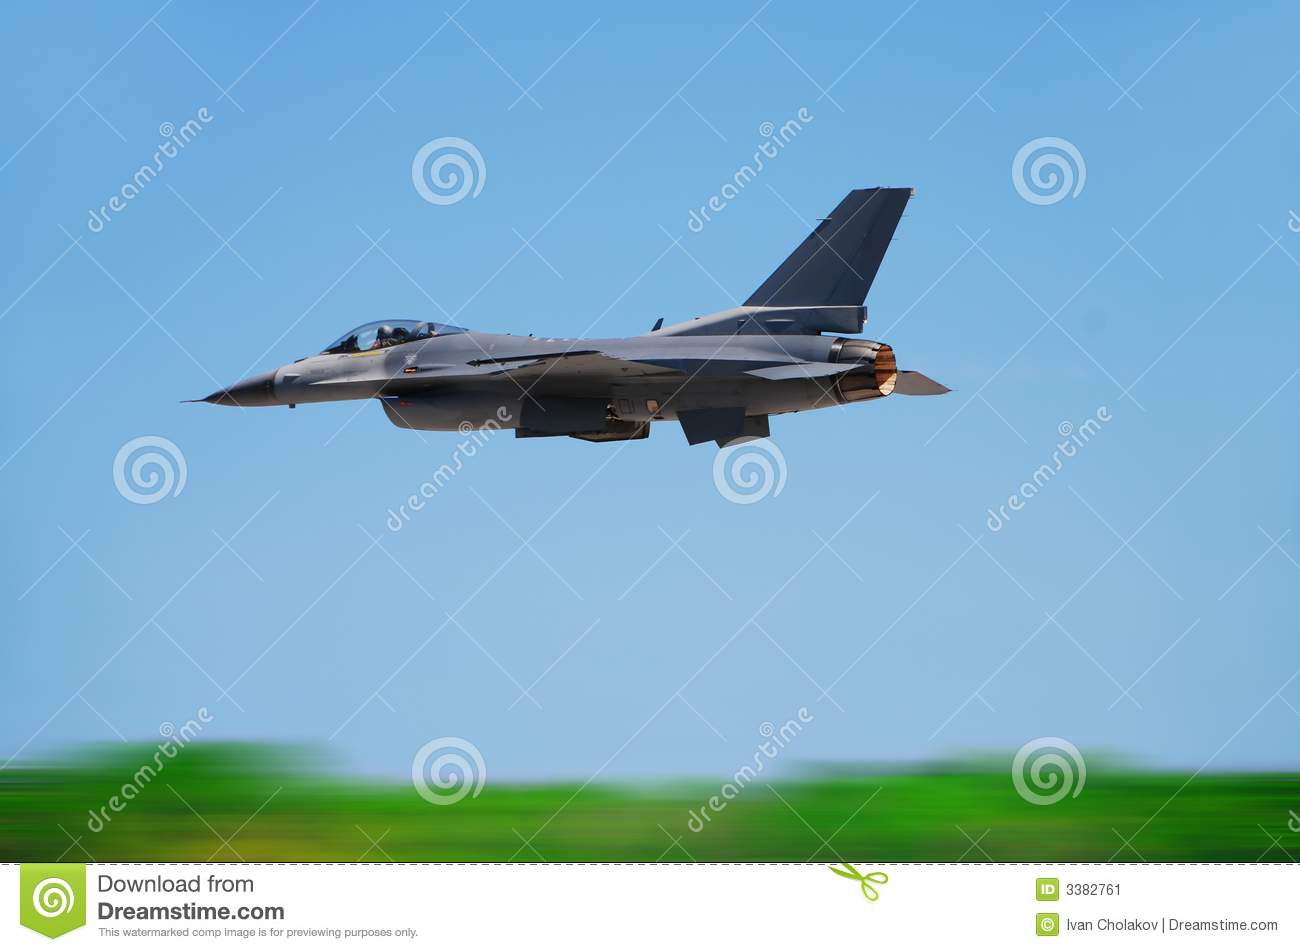 Military Jet In Flight Stock Image   Image  3382761